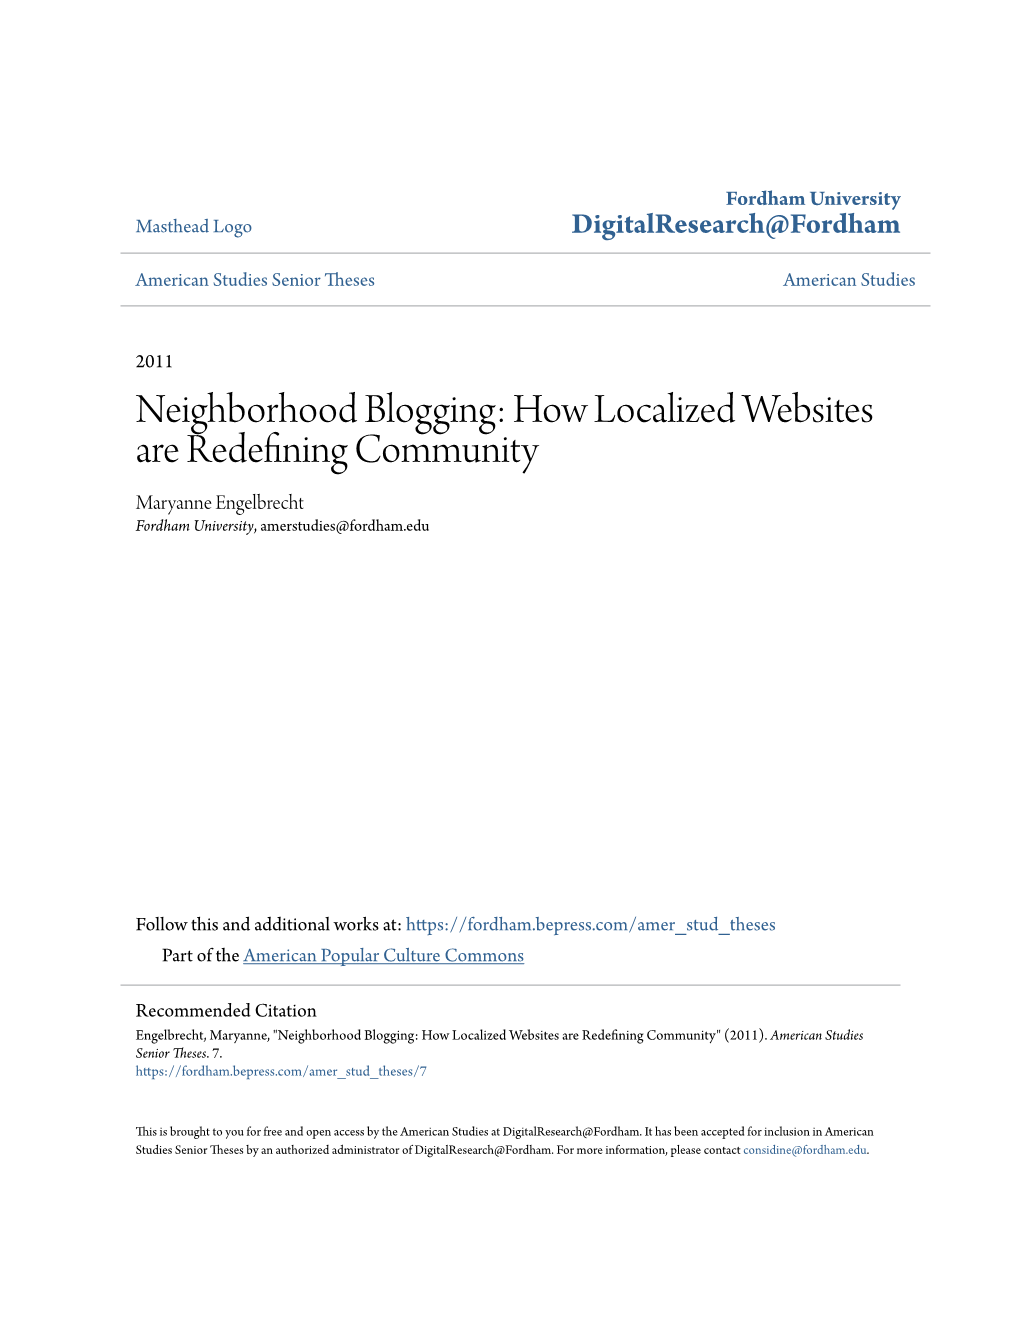 Neighborhood Blogging: How Localized Websites Are Redefining Community Maryanne Engelbrecht Fordham University, Amerstudies@Fordham.Edu